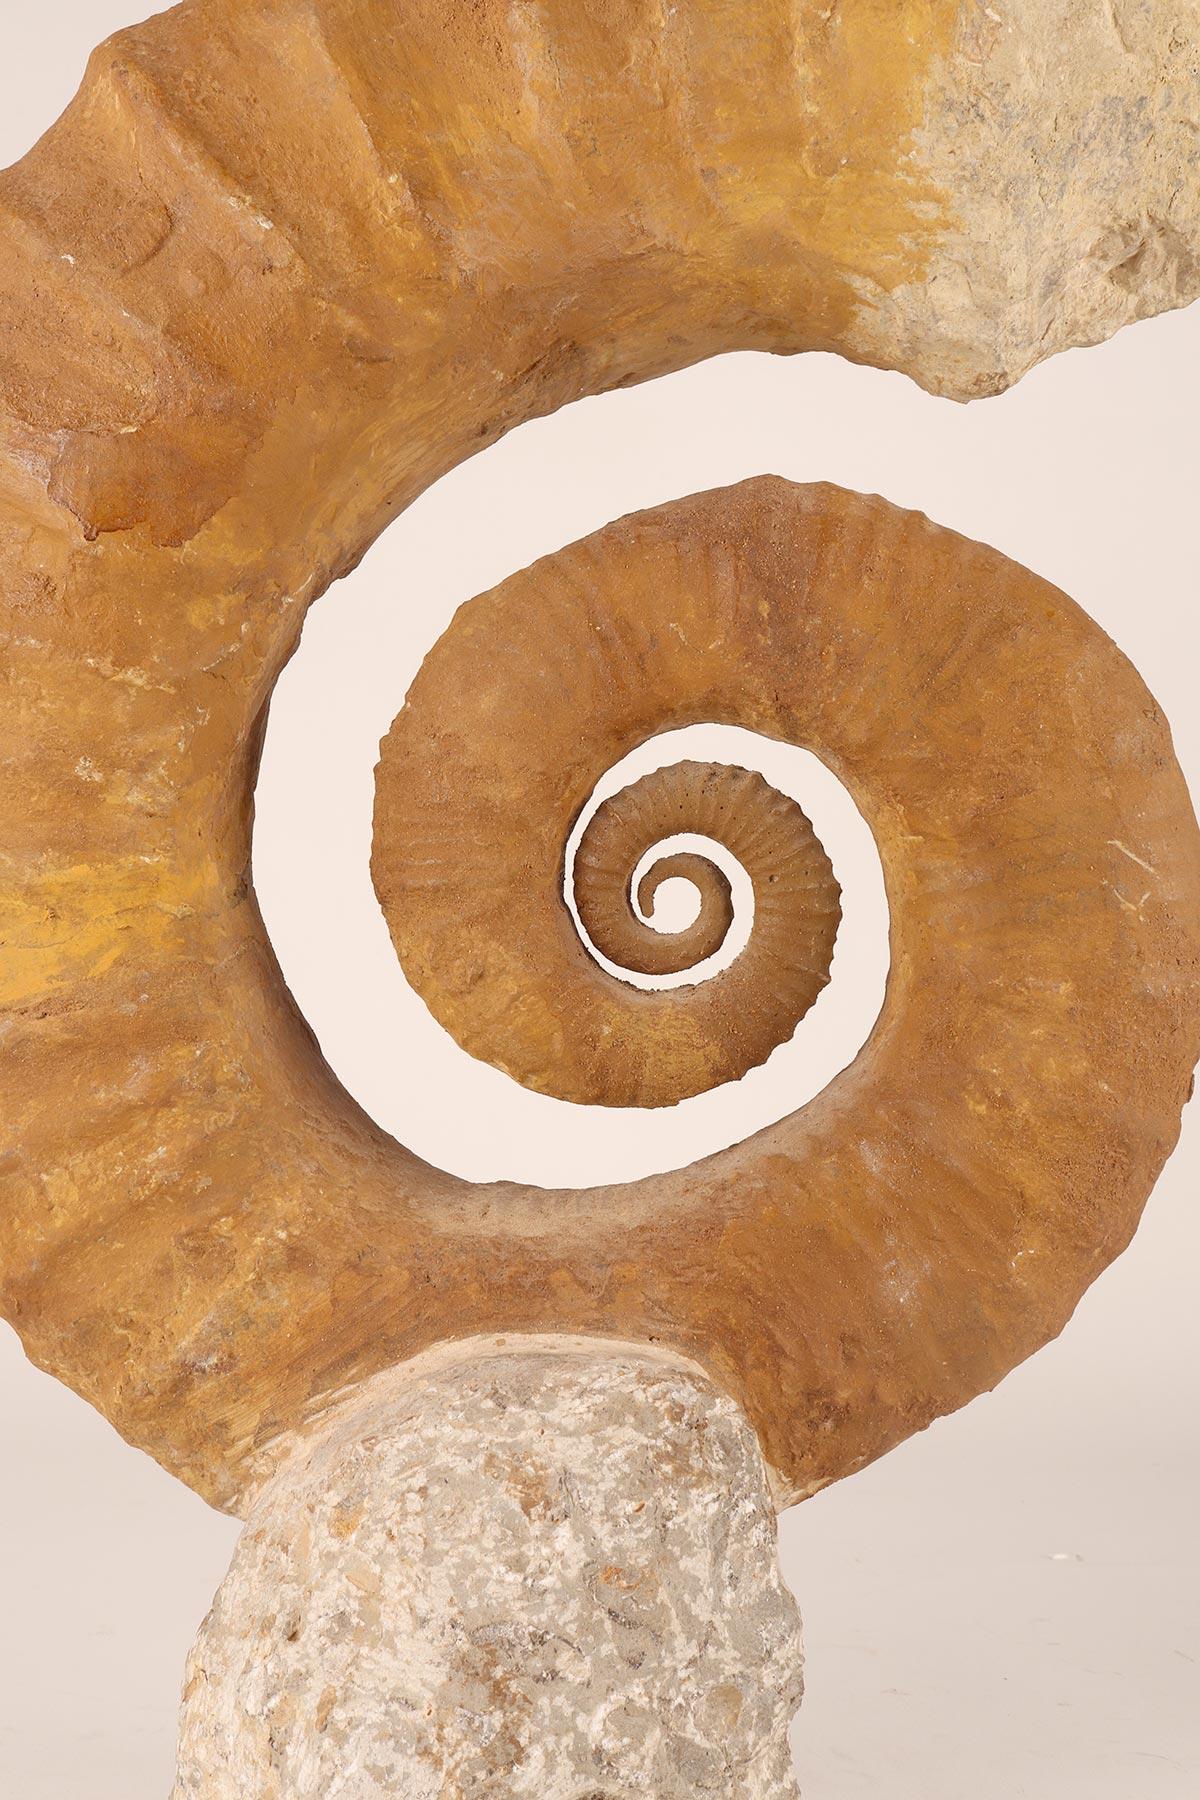 spiral fossil